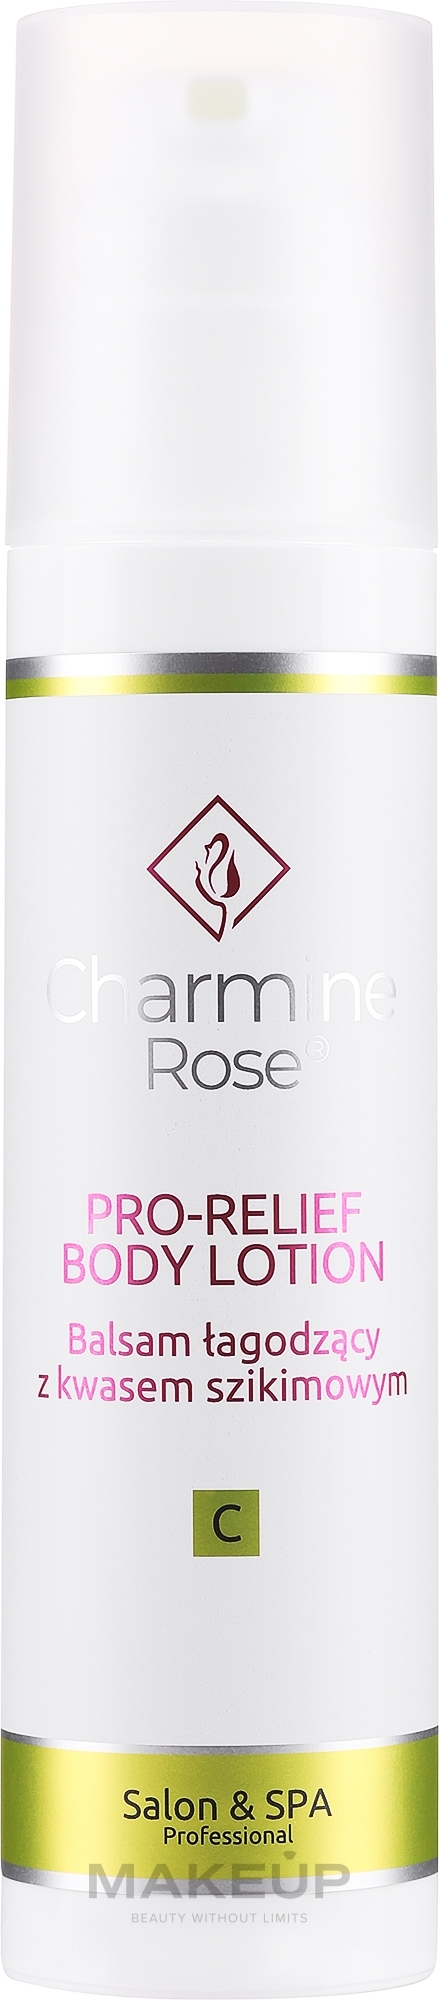 Успокаивающий бальзам для тела - Charmine Rose Pro-Relief Body Lotion — фото 200ml